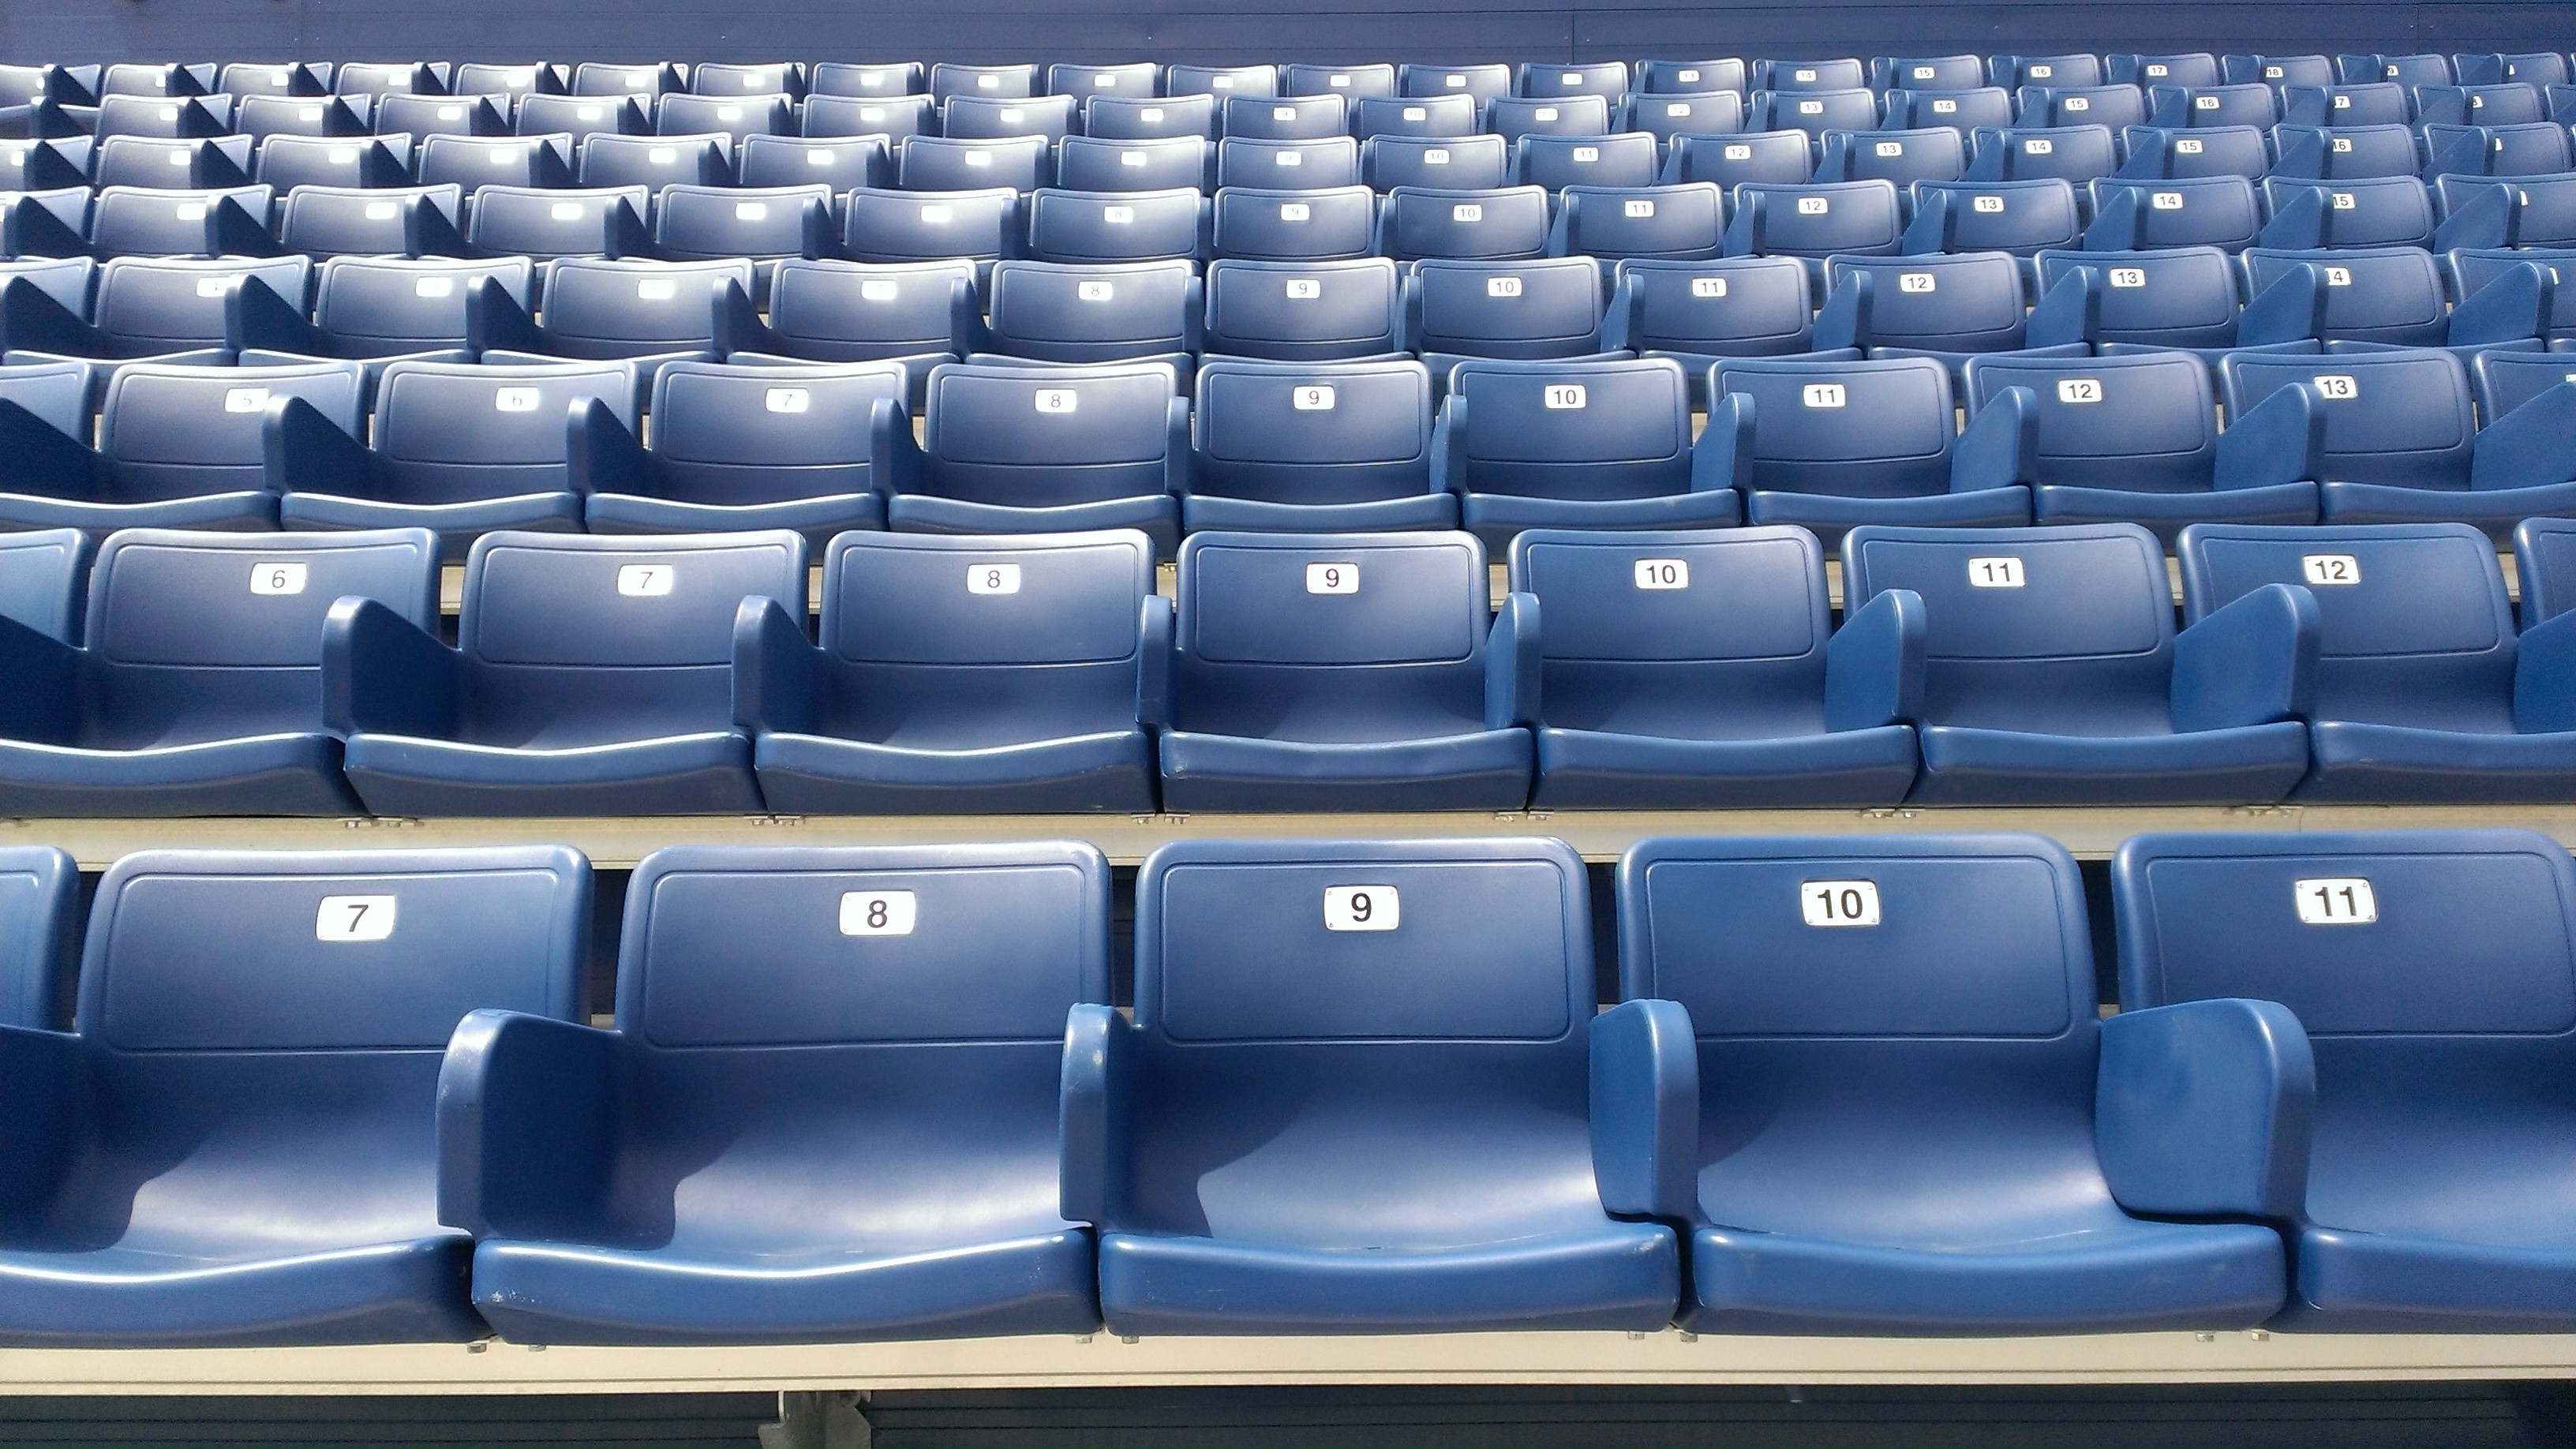 Stadium seating | Furniture From Turkey